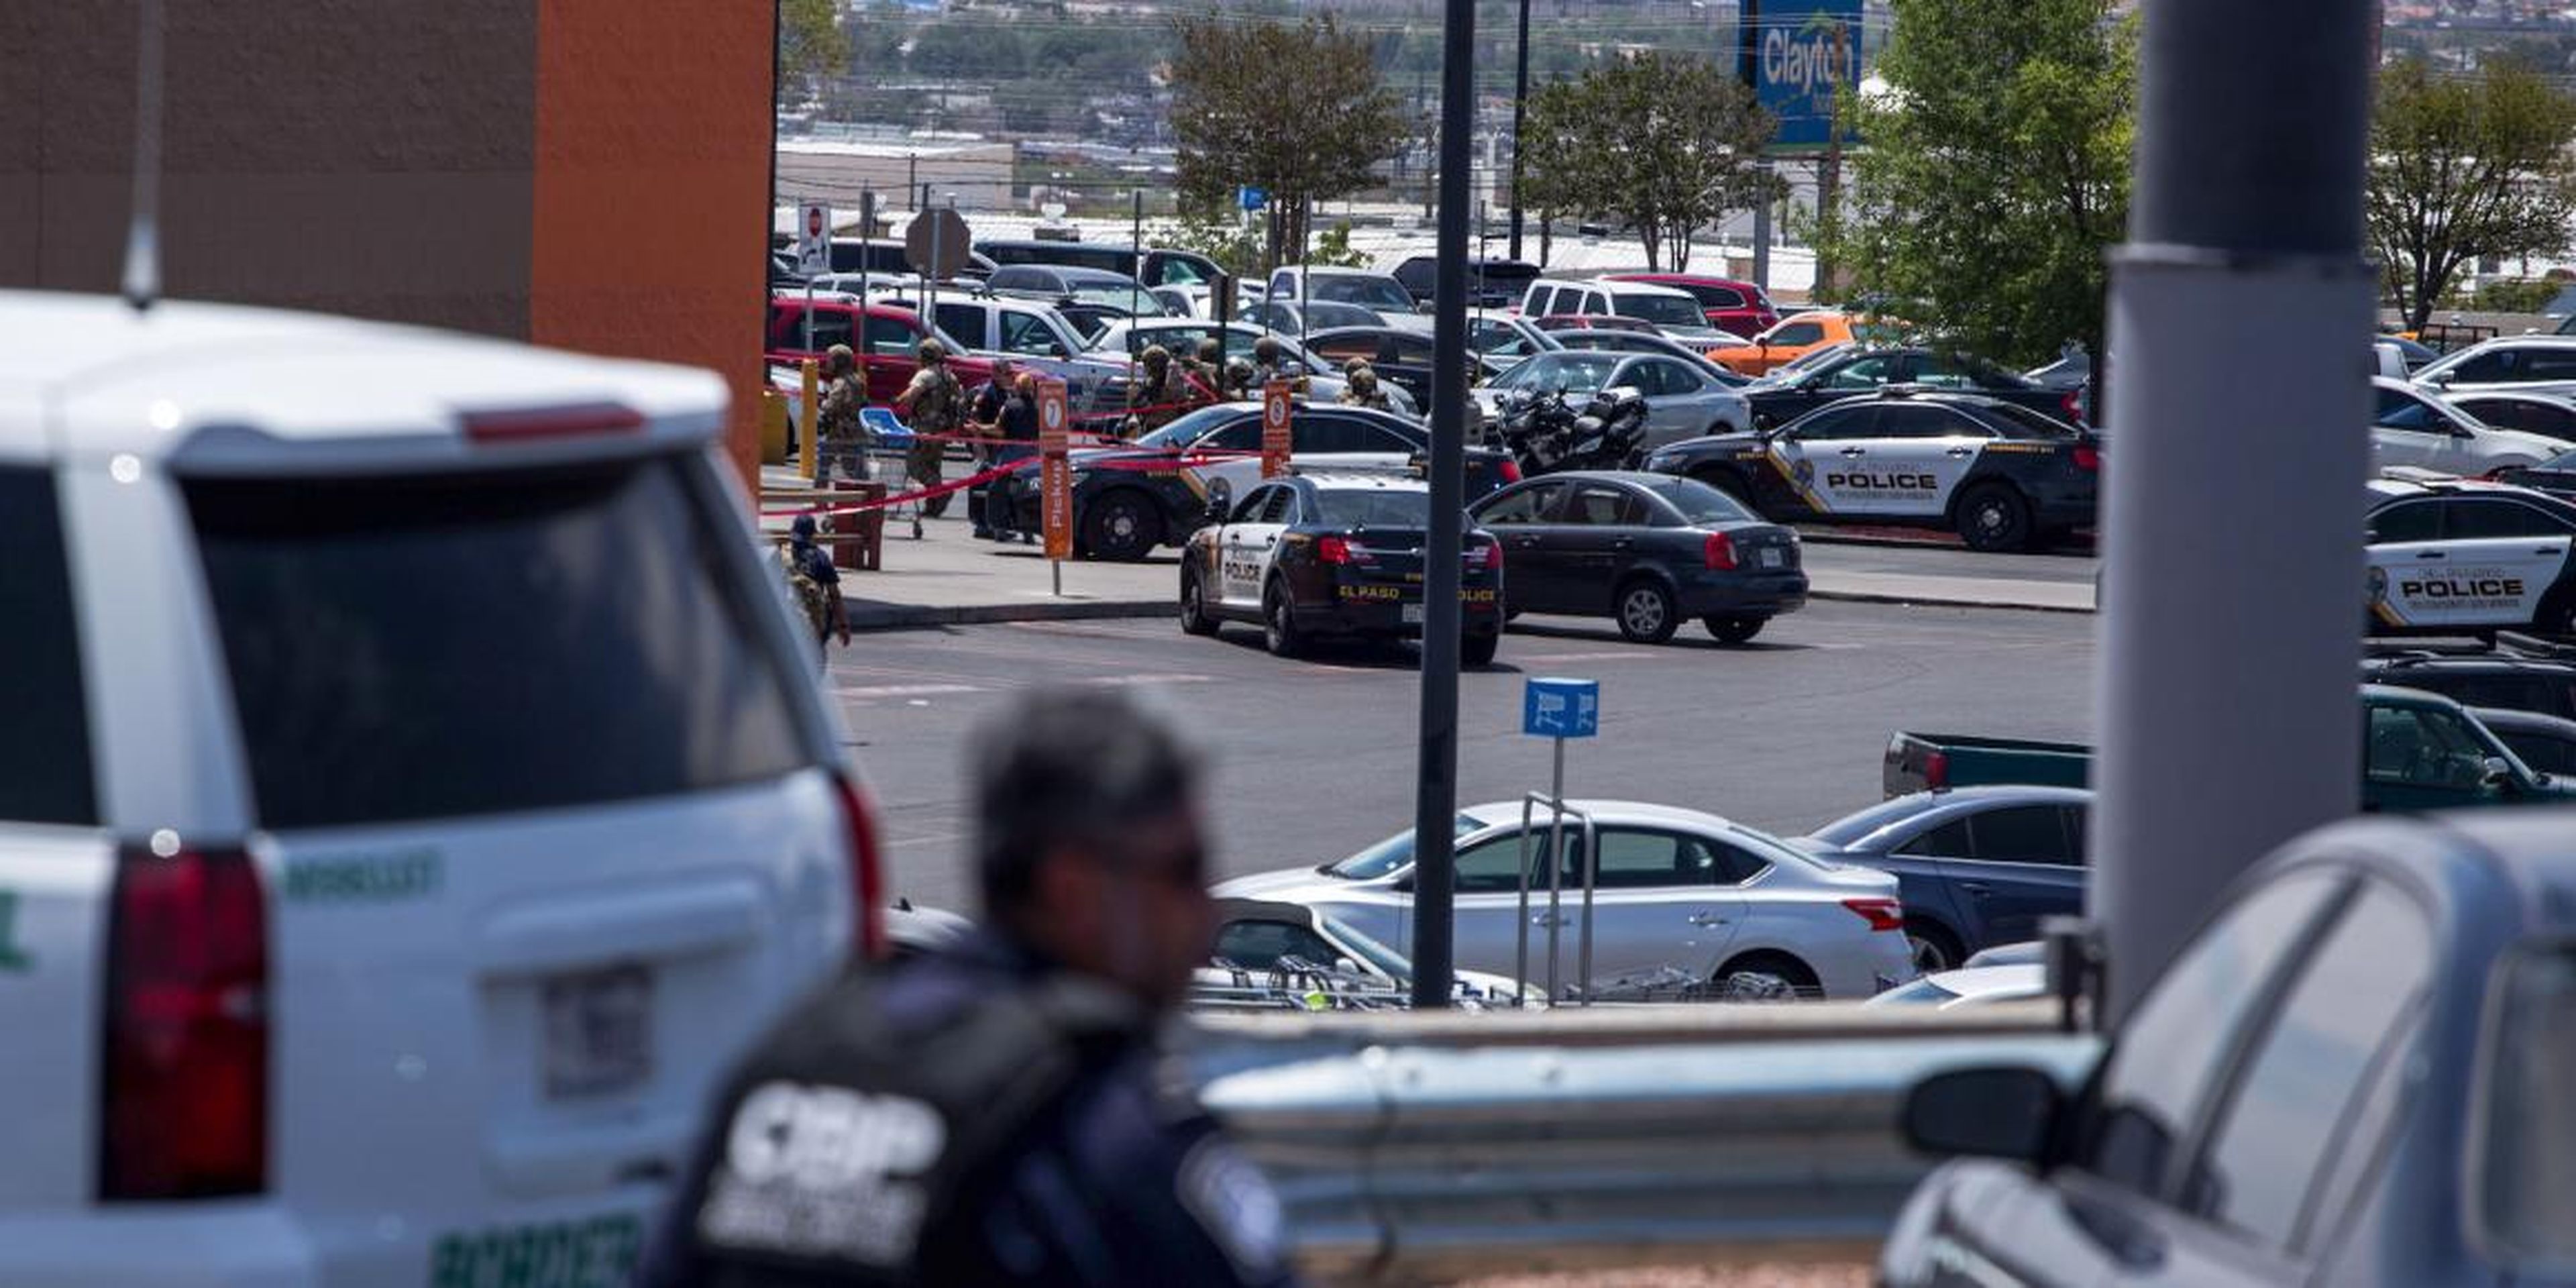 Law enforcement agencies respond to an active shooter at a Wal-Mart near Cielo Vista Mall in El Paso, Texas, Saturday, Aug. 3, 2019.